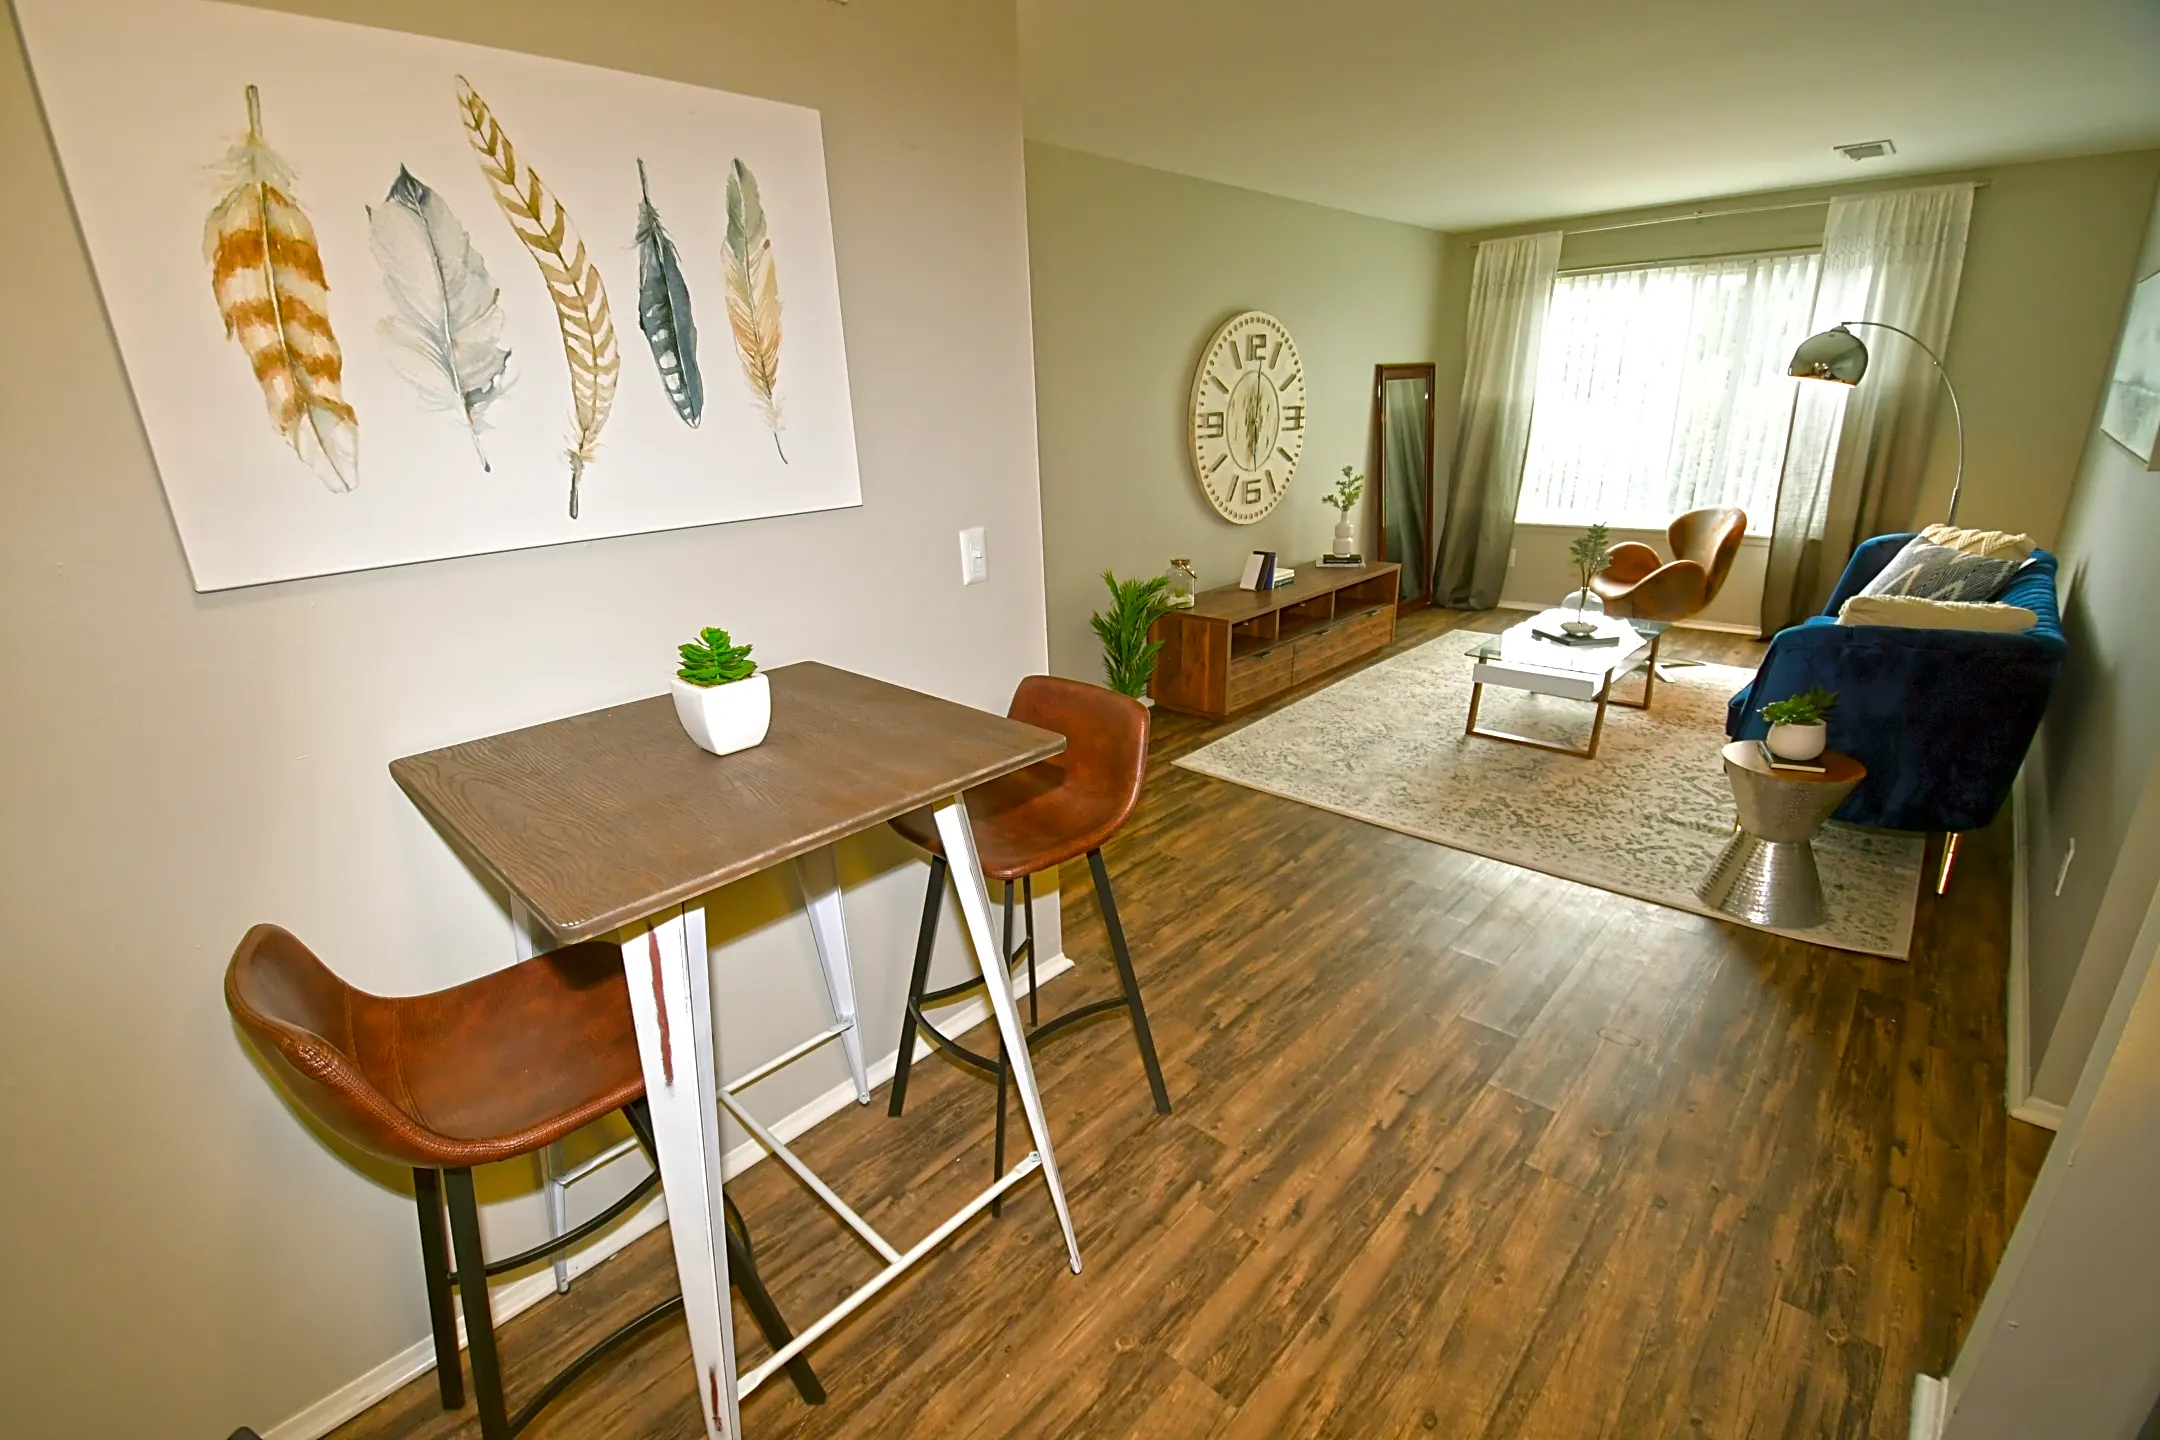 Dining Room - Spice Tree Apartments - Ann Arbor, MI